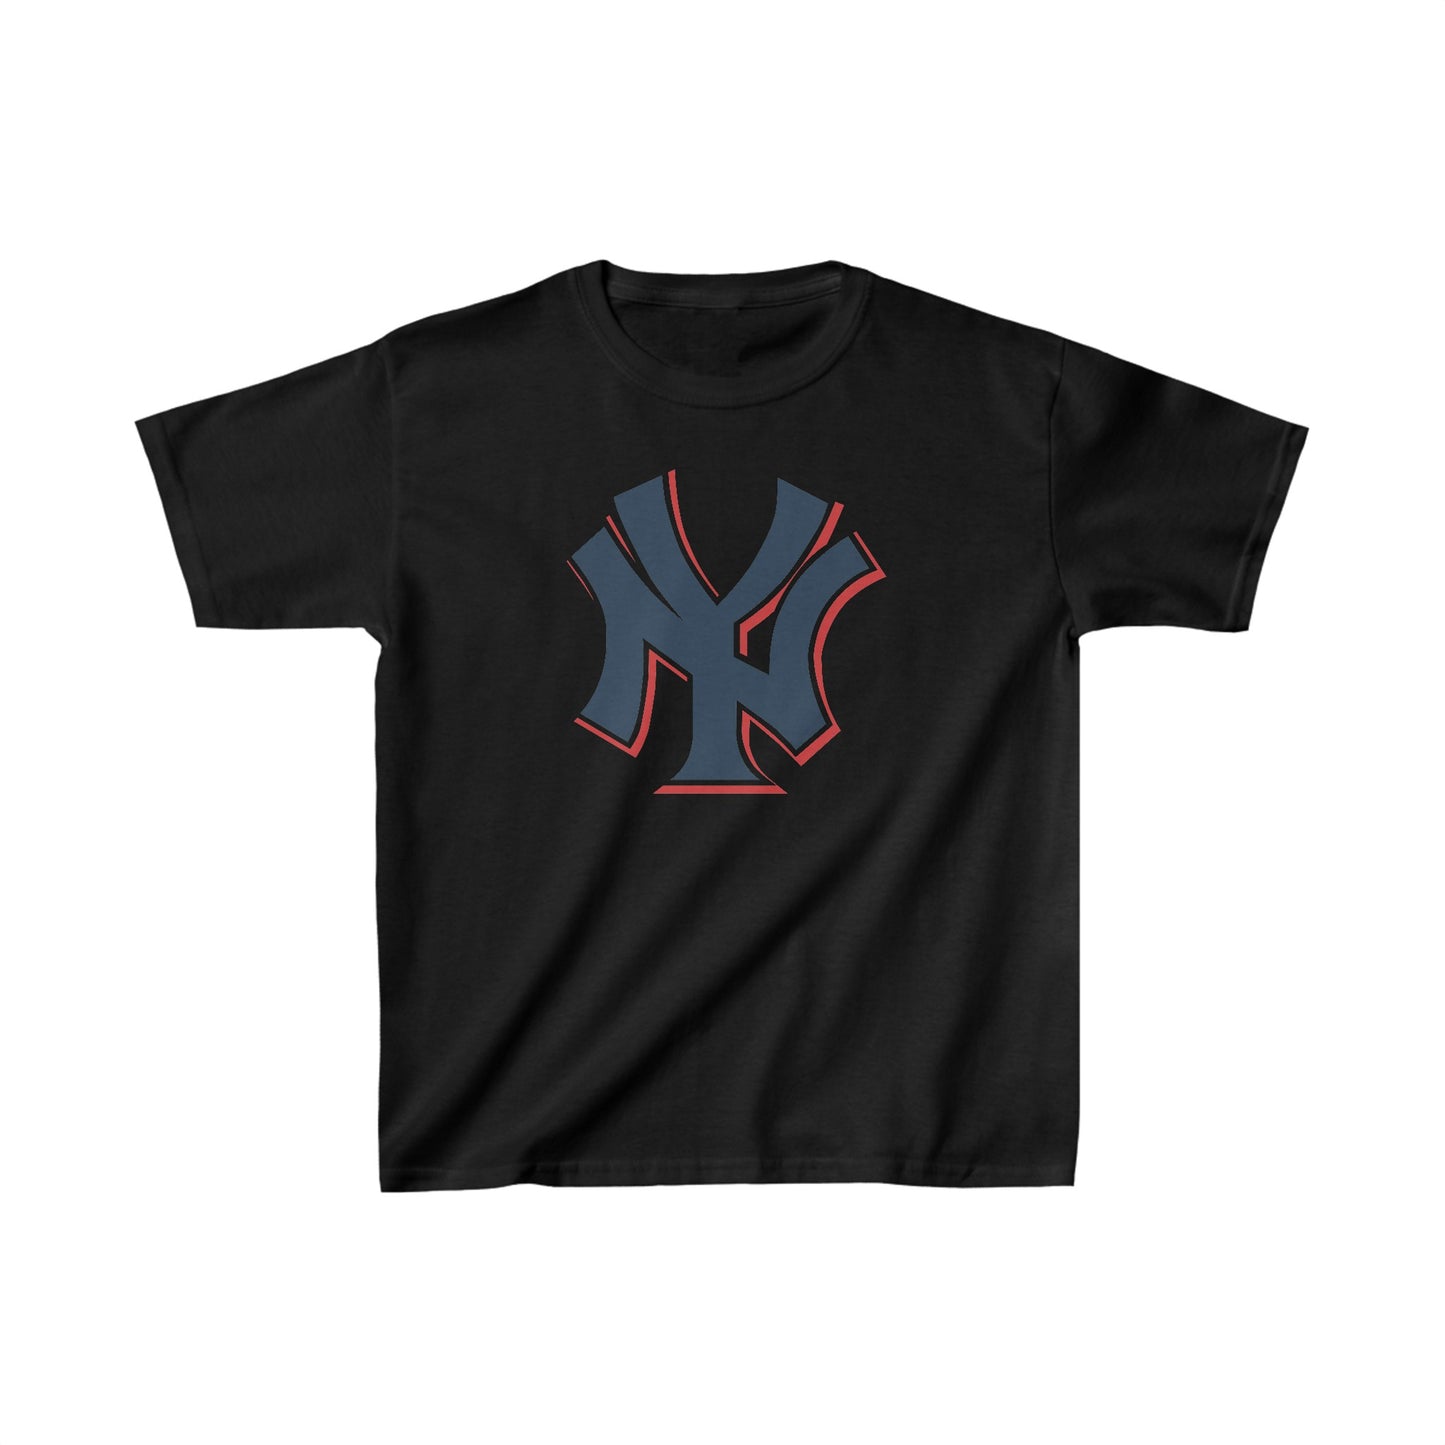 New York Yankees Youth T-Shirt